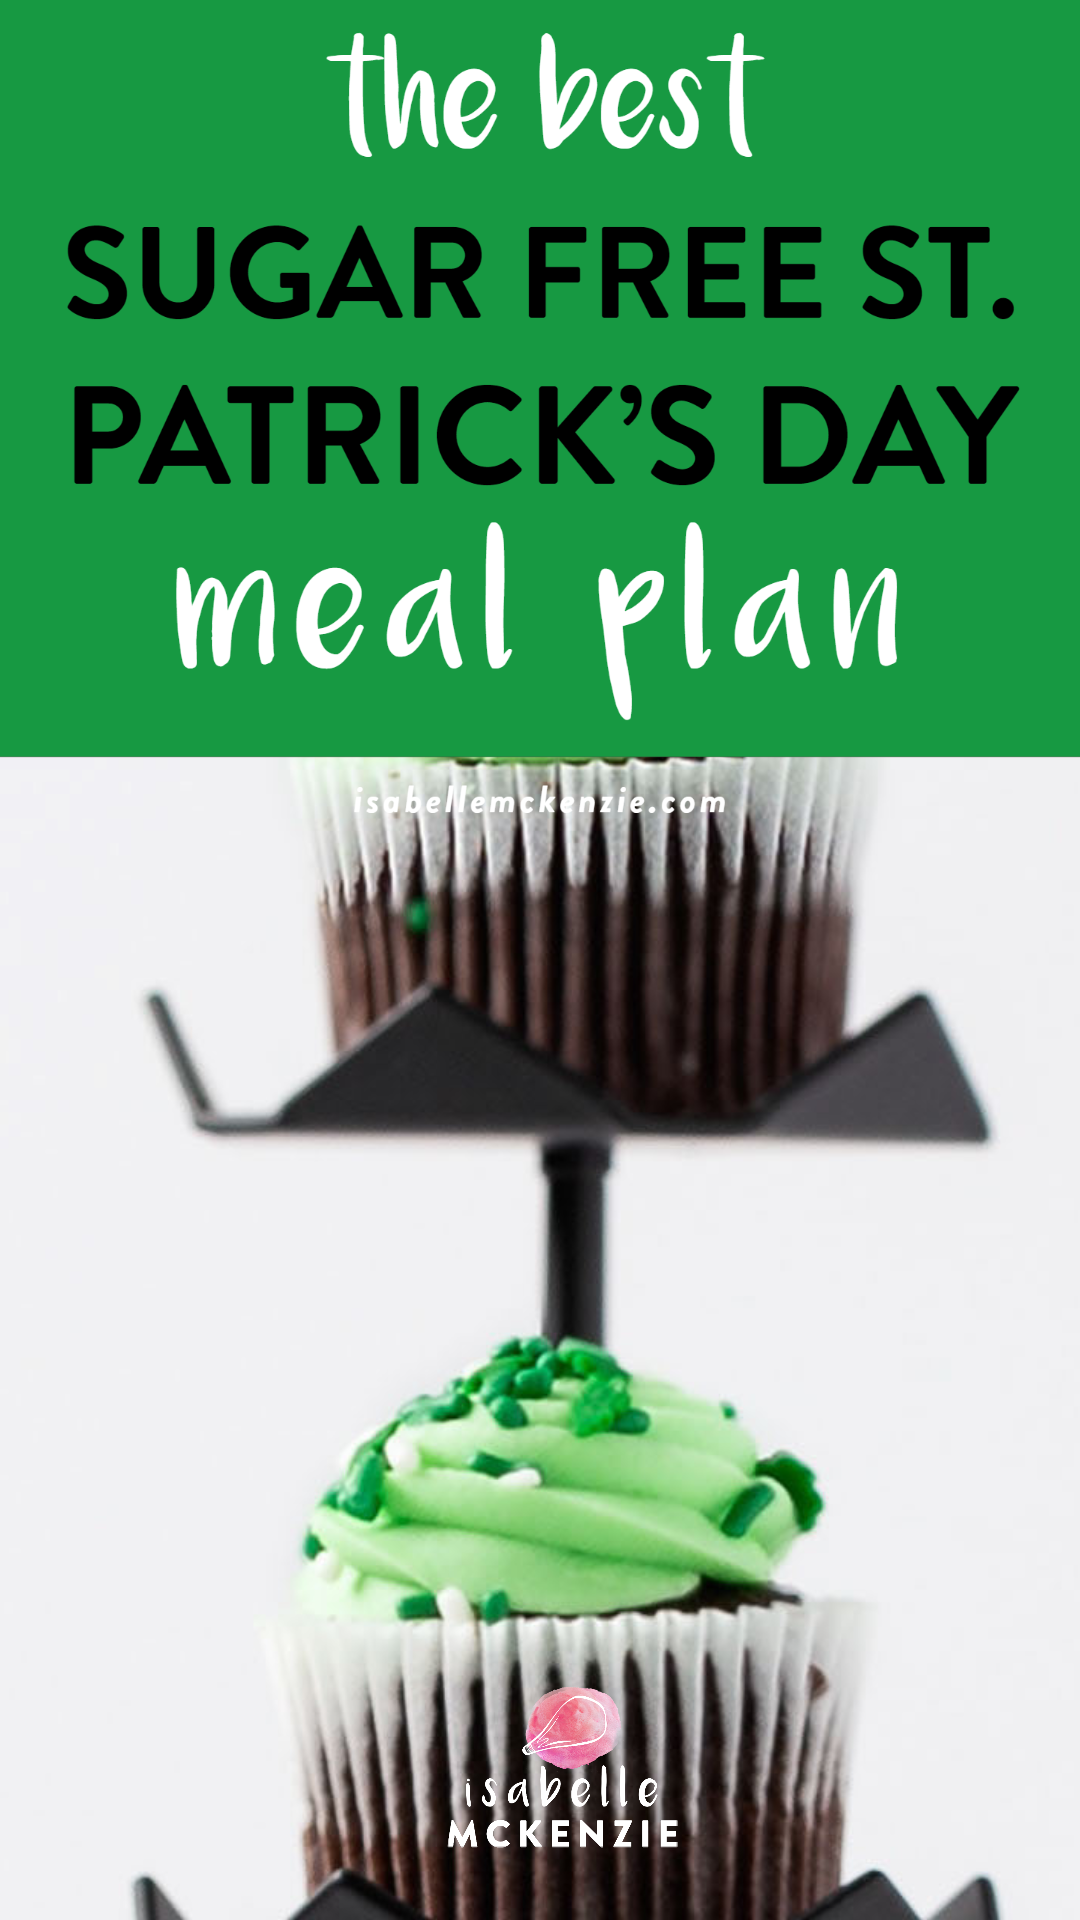 The Best Sugar Free Low Sugar St Patrick's Day Recipes + Free Menu Plan